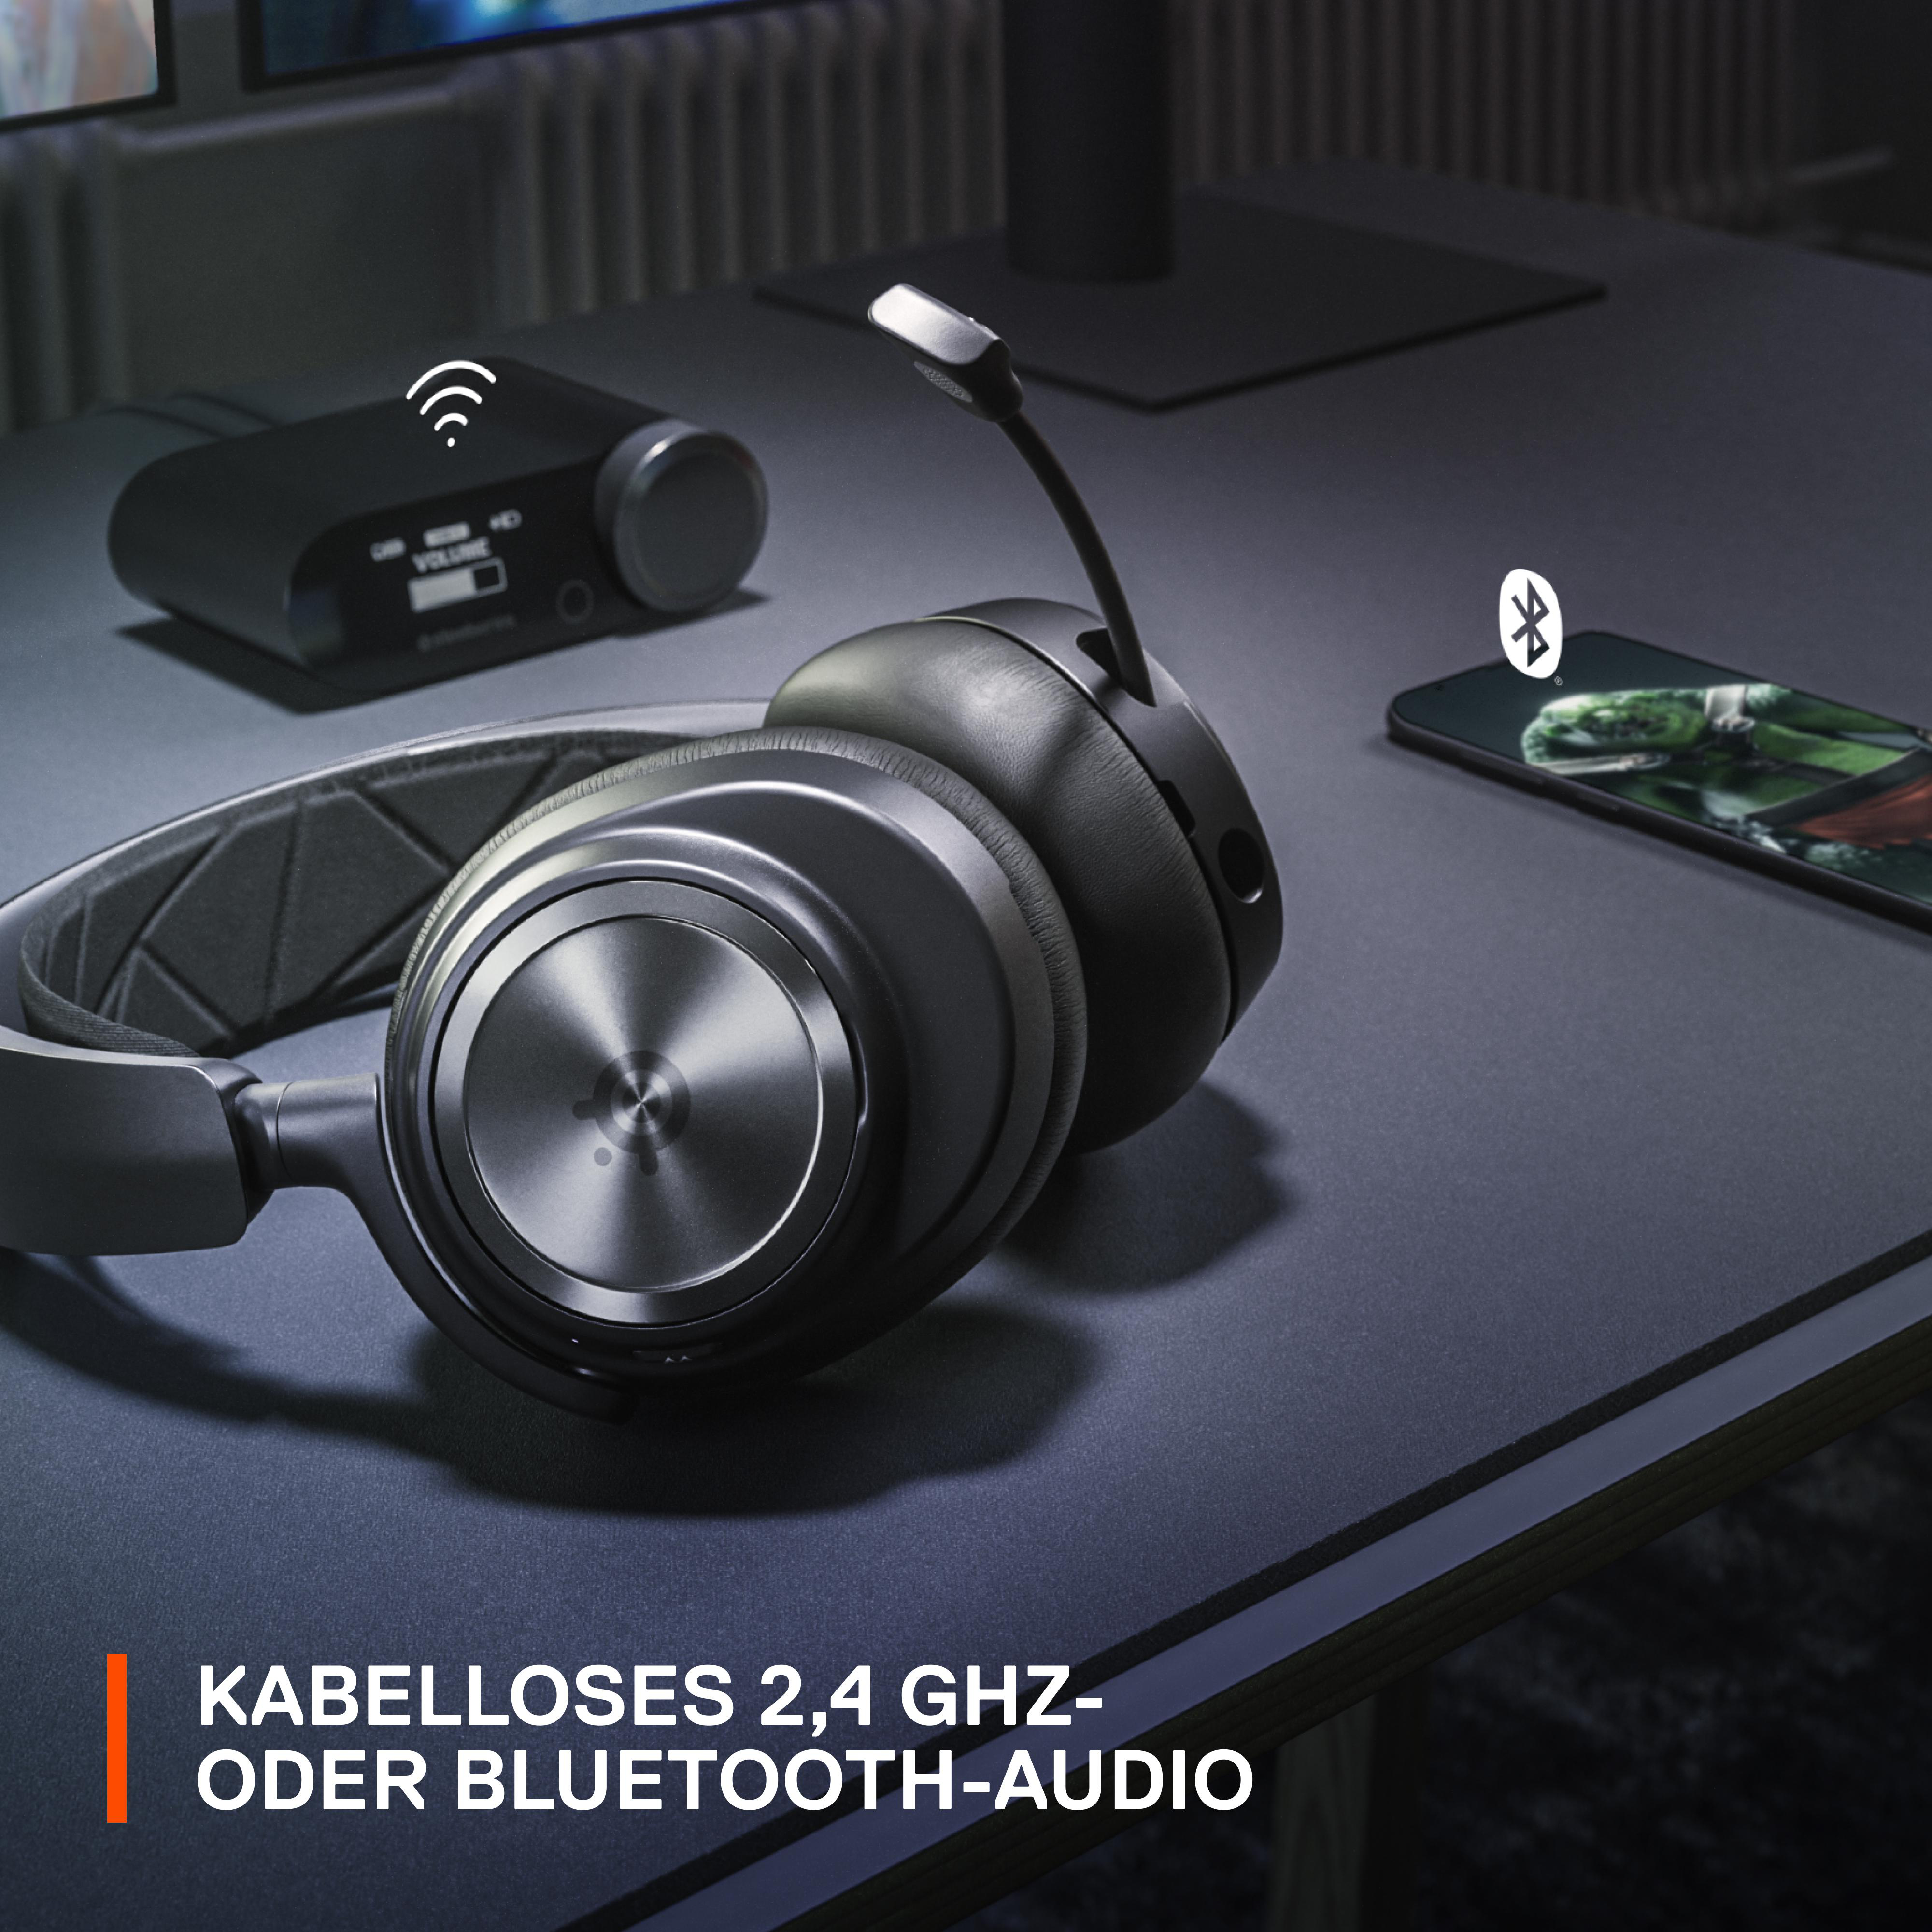 Arctis Gaming-Headset Schwarz Pro Nova Bluetooth STEELSERIES Wireless, Over-ear